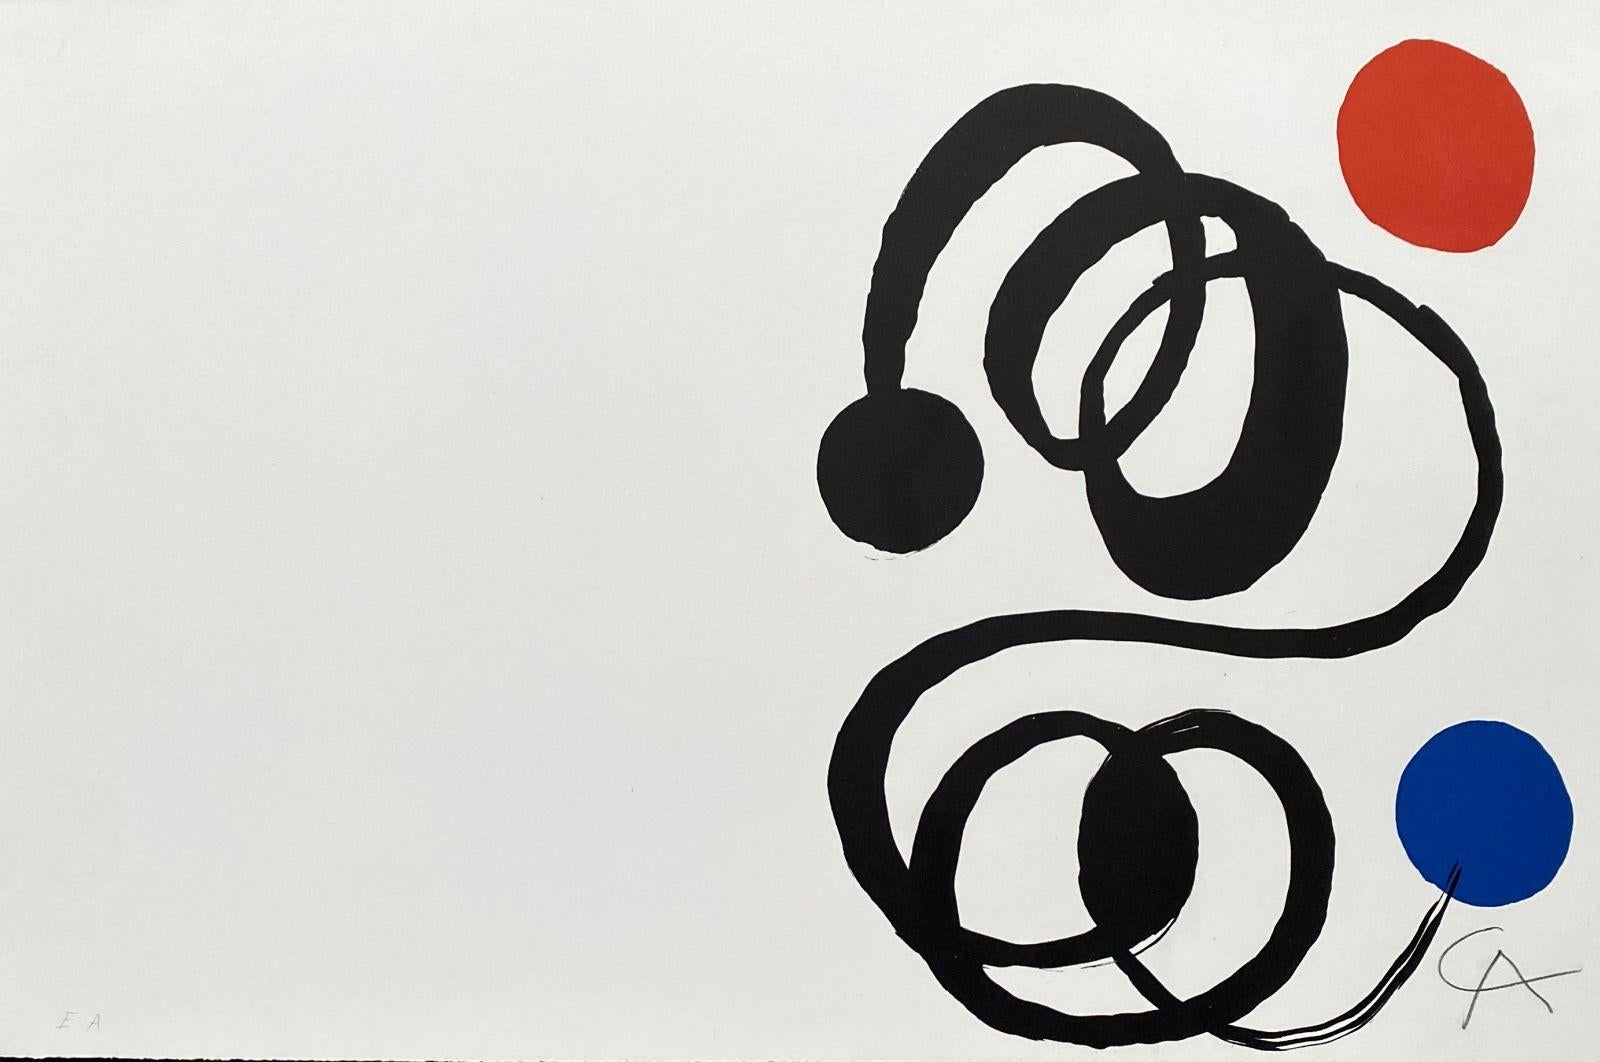 Black Spiral, Red & Blue Bubbles - Original Lithograph Hand Signed  - Print by Alexander Calder